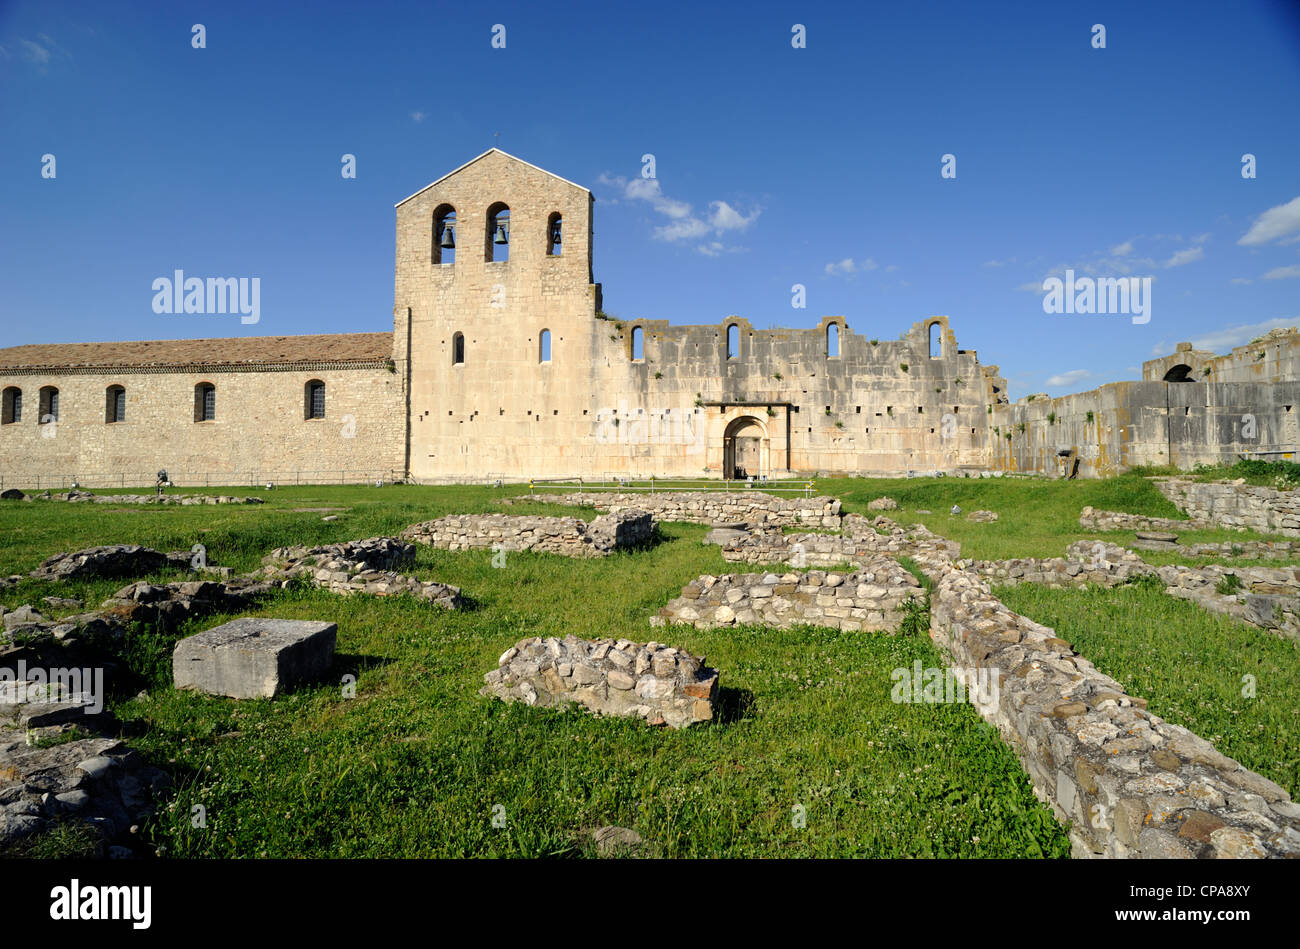 Italia, Basilicata, venosa, parco archeologico, rovine paleocristiane e chiesa medievale Foto Stock